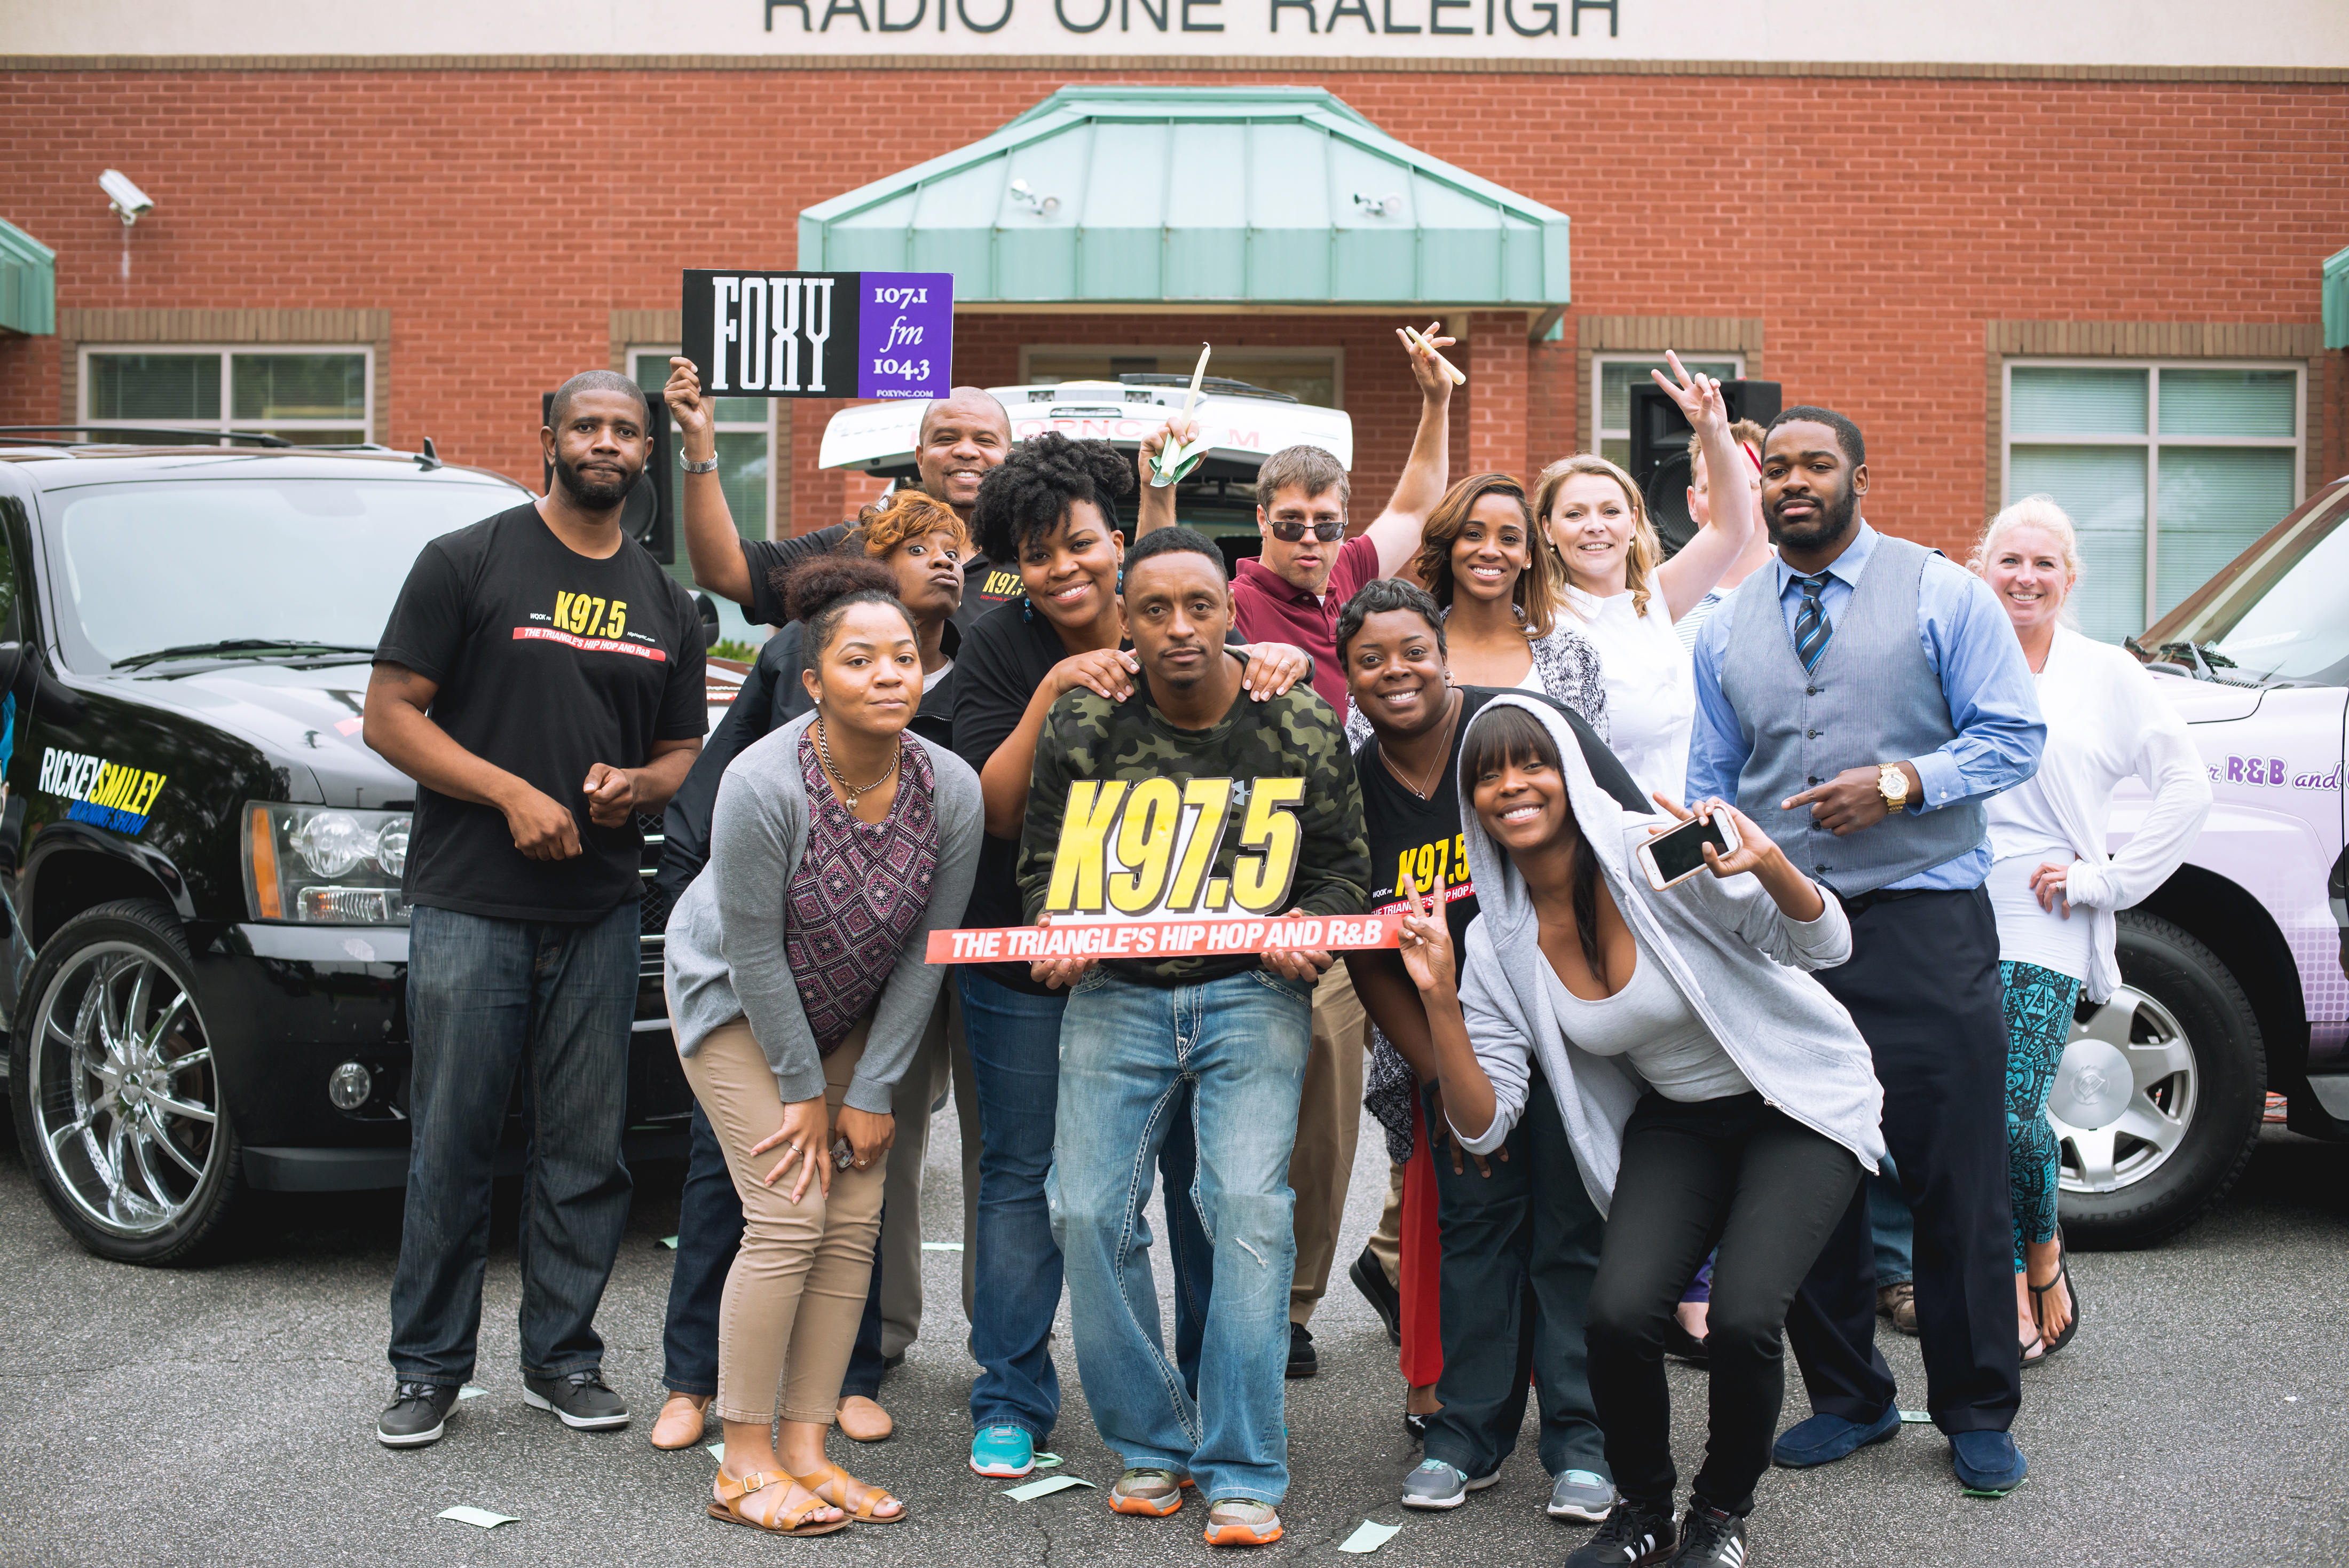 Radio One Raleigh Staff